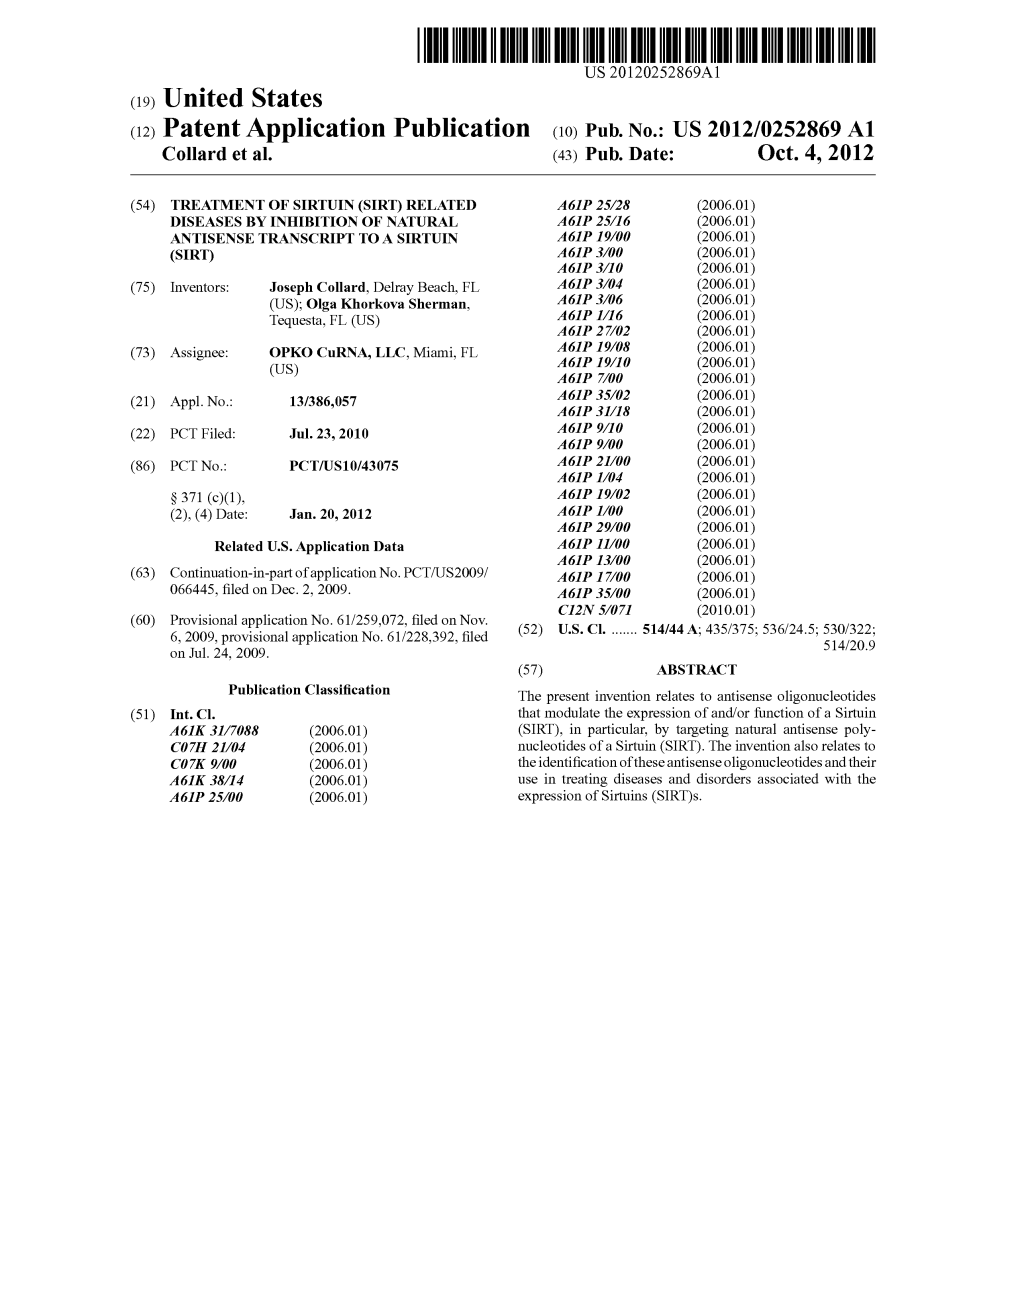 (12) Patent Application Publication (10) Pub. No.: US 2012/0252869 A1 Collard Et Al